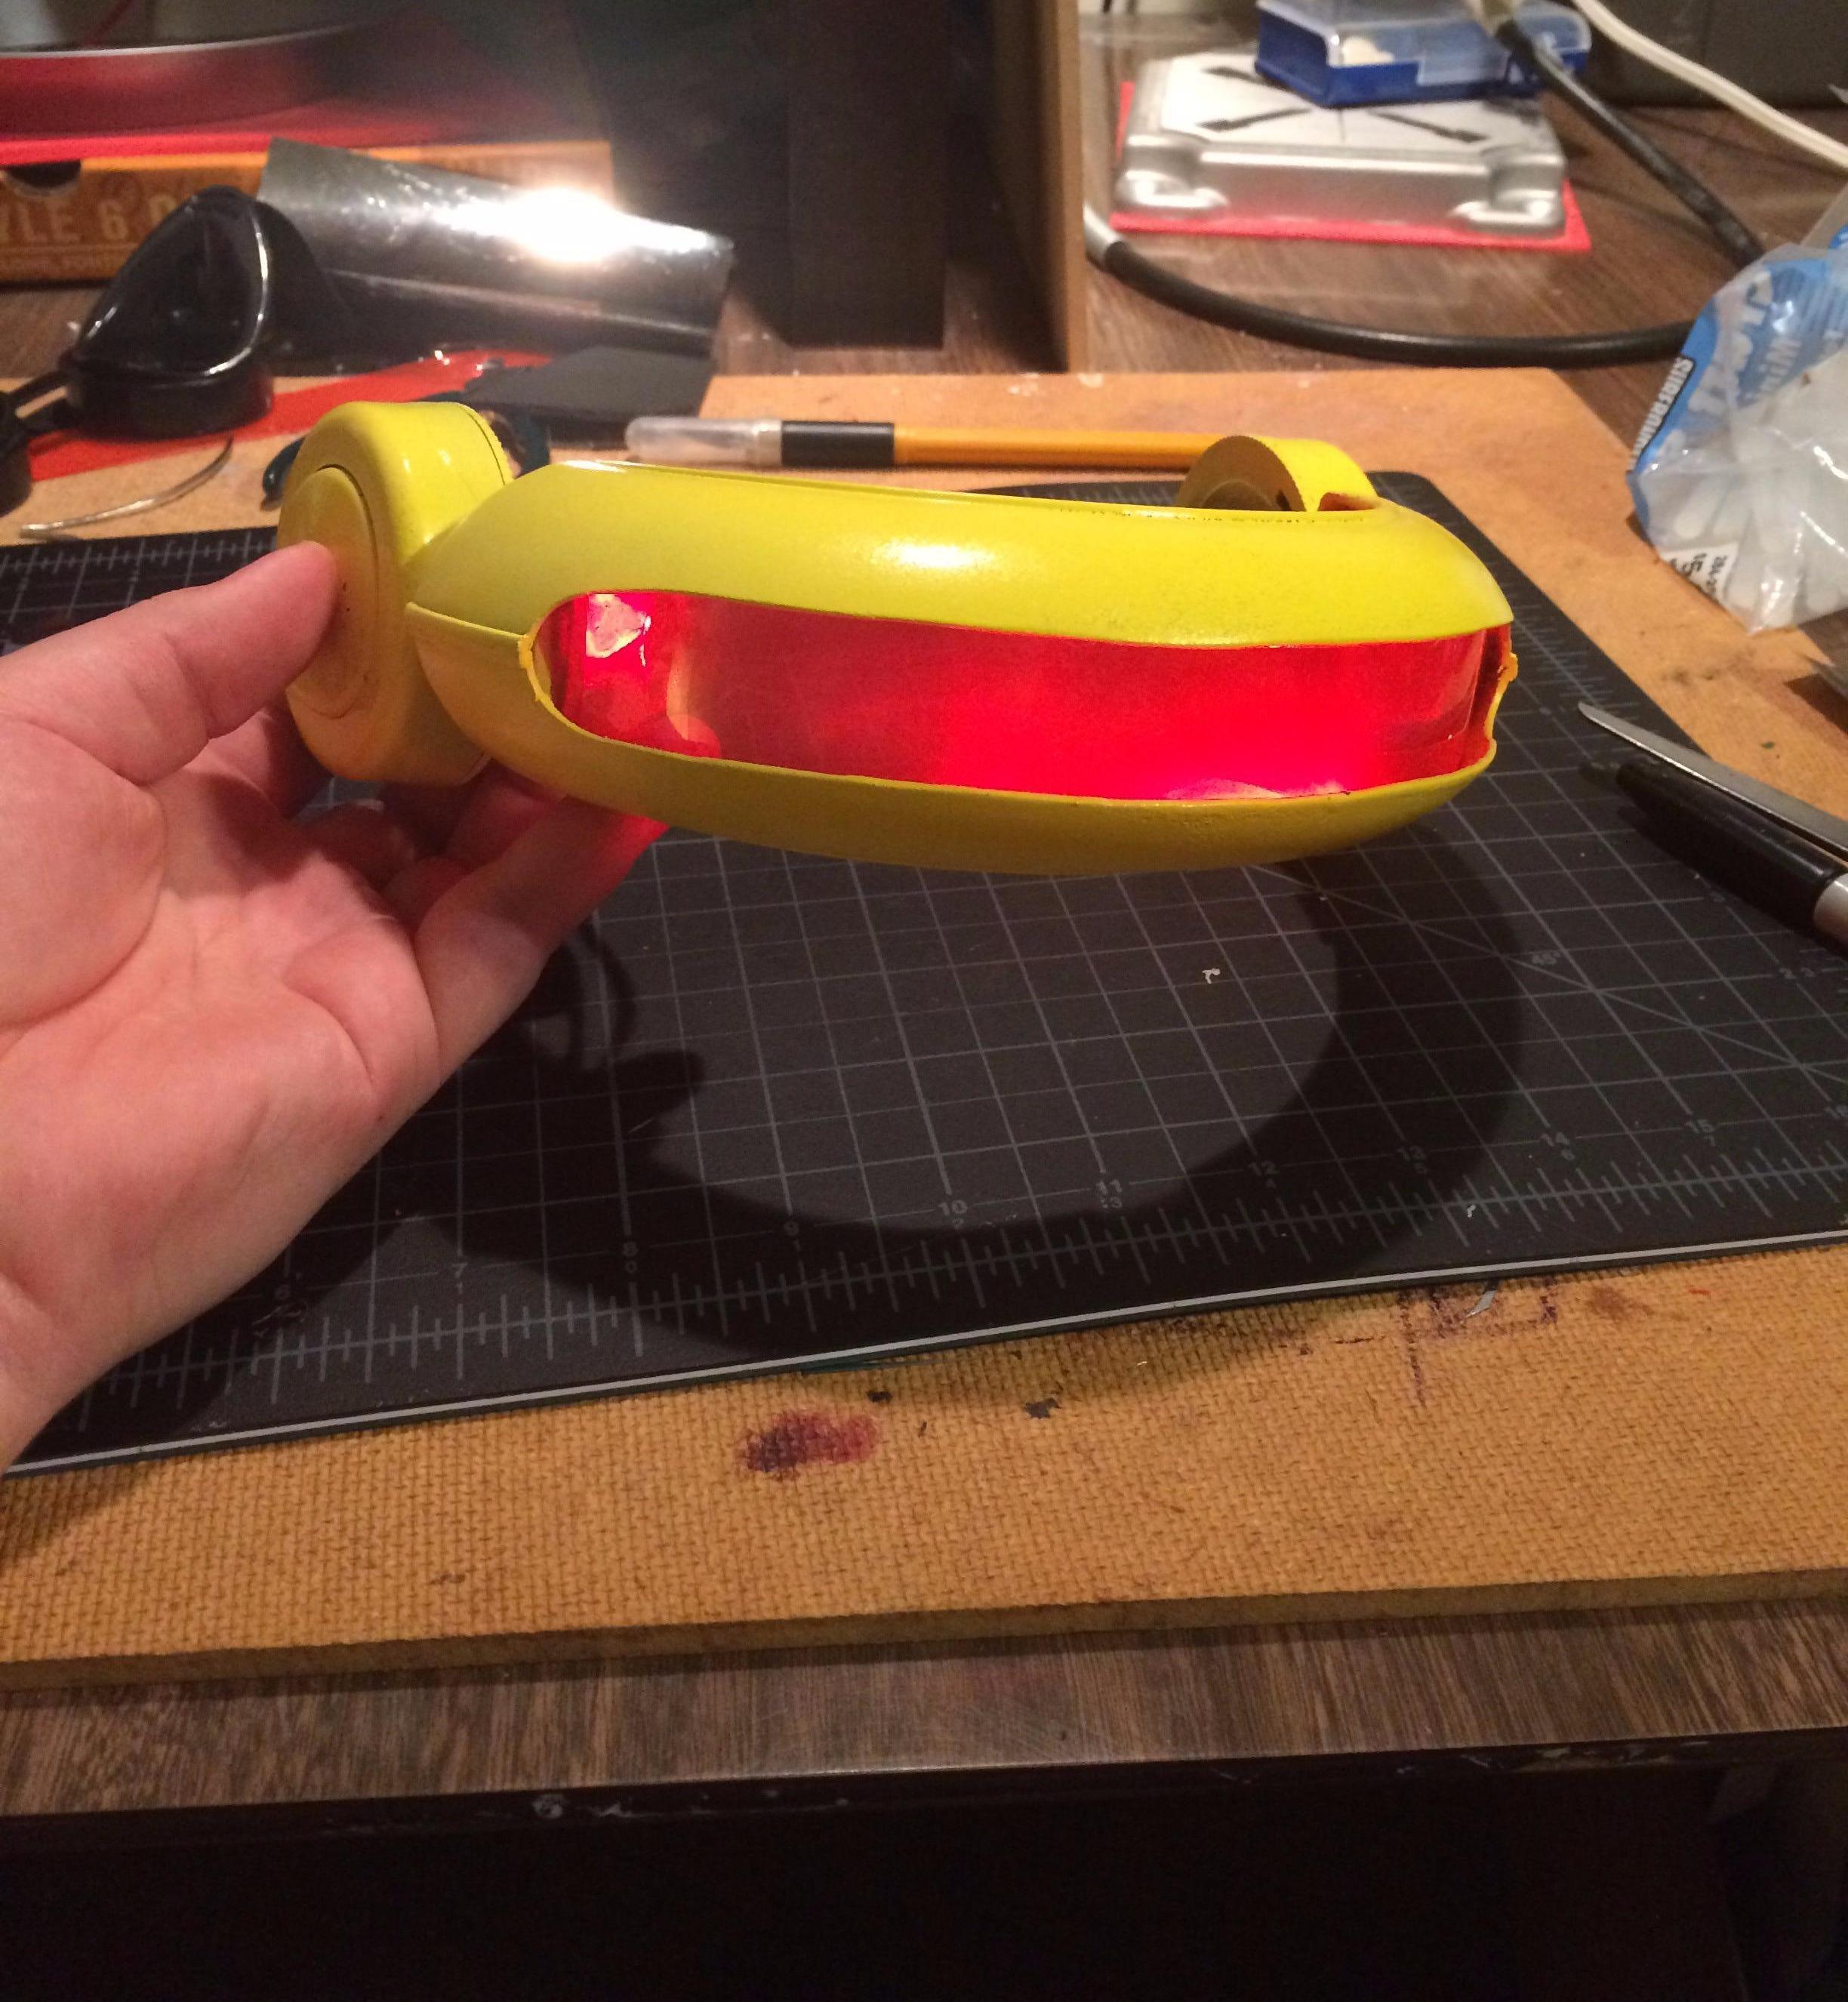 Cyclops Optic Visor Cheap and Easy DIY Prop Tutorial